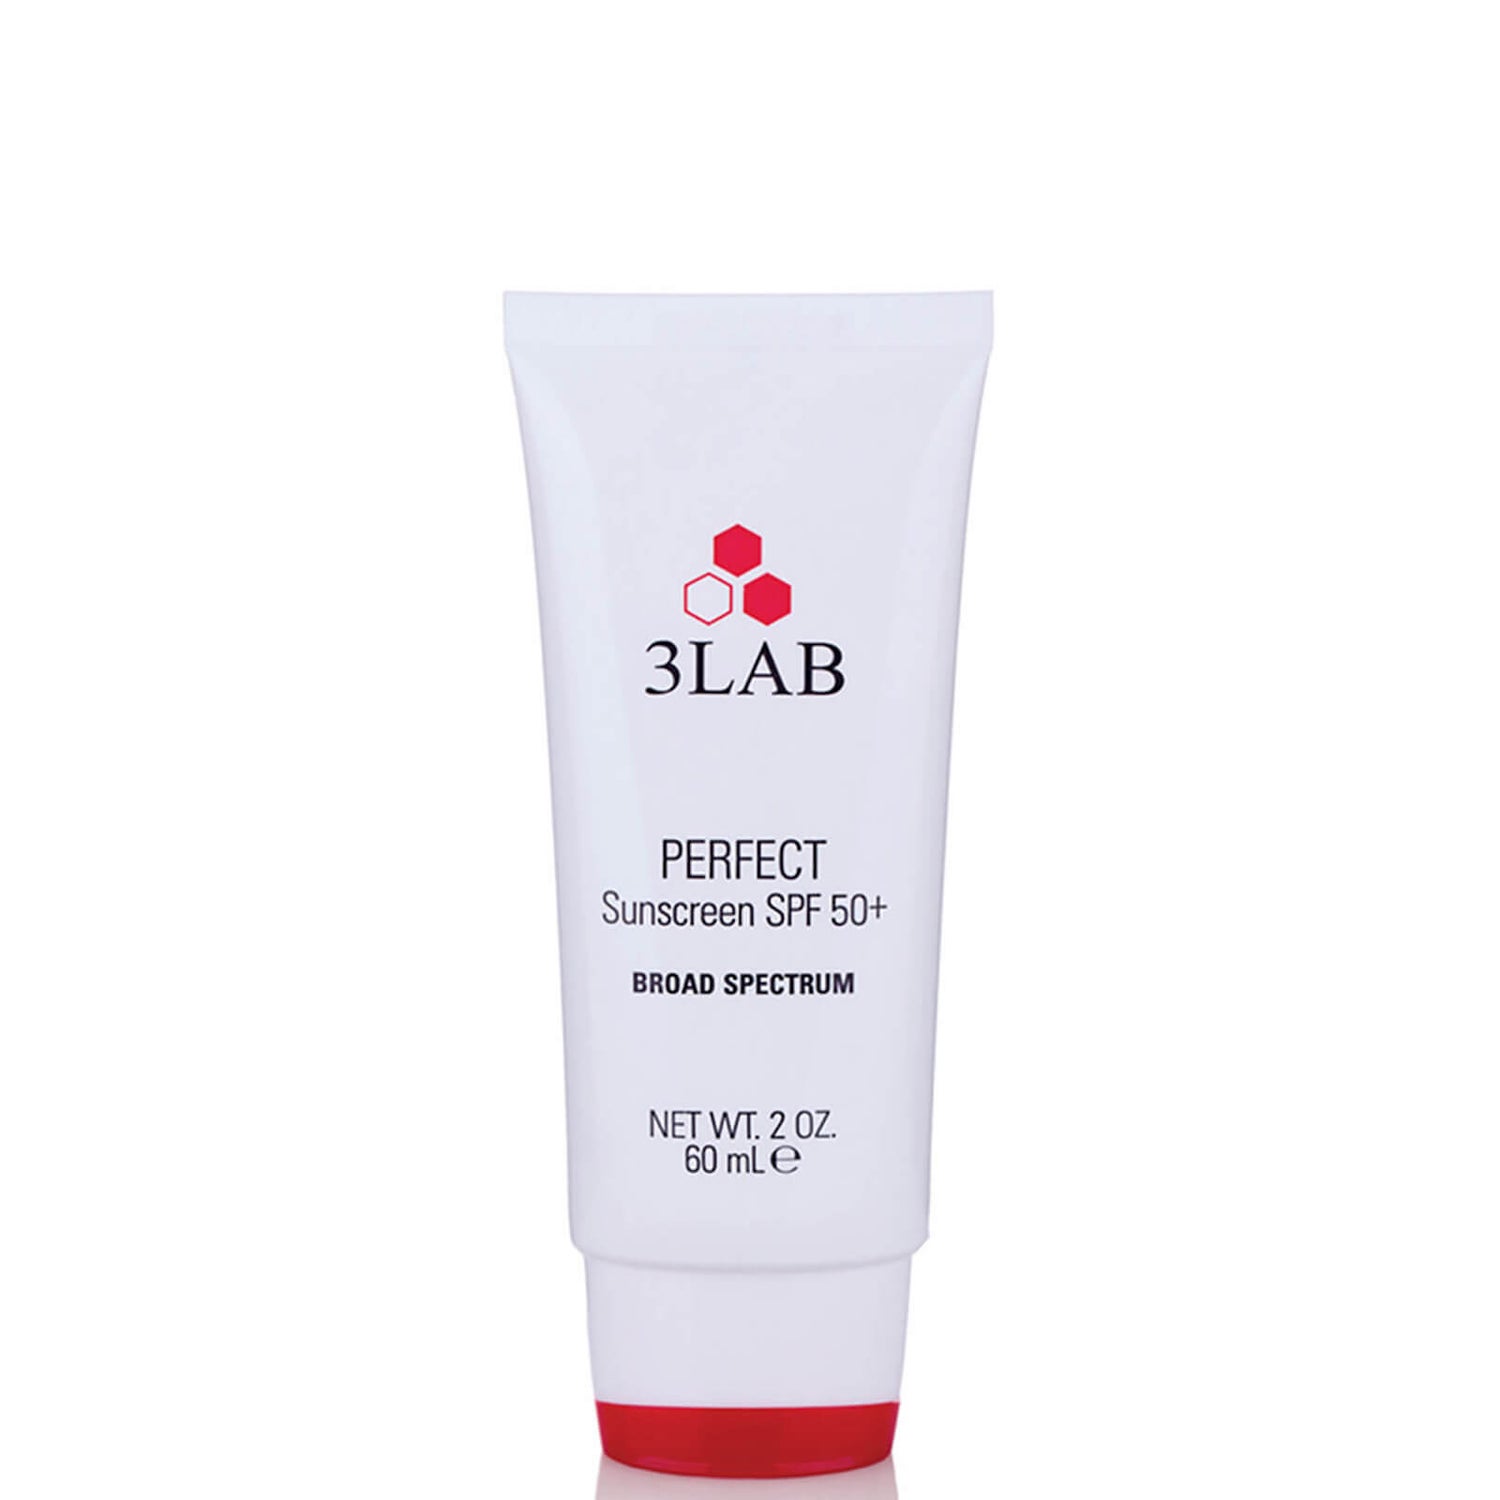 3LAB Perfect Sunscreen SPF 50+ Broad Spectrum